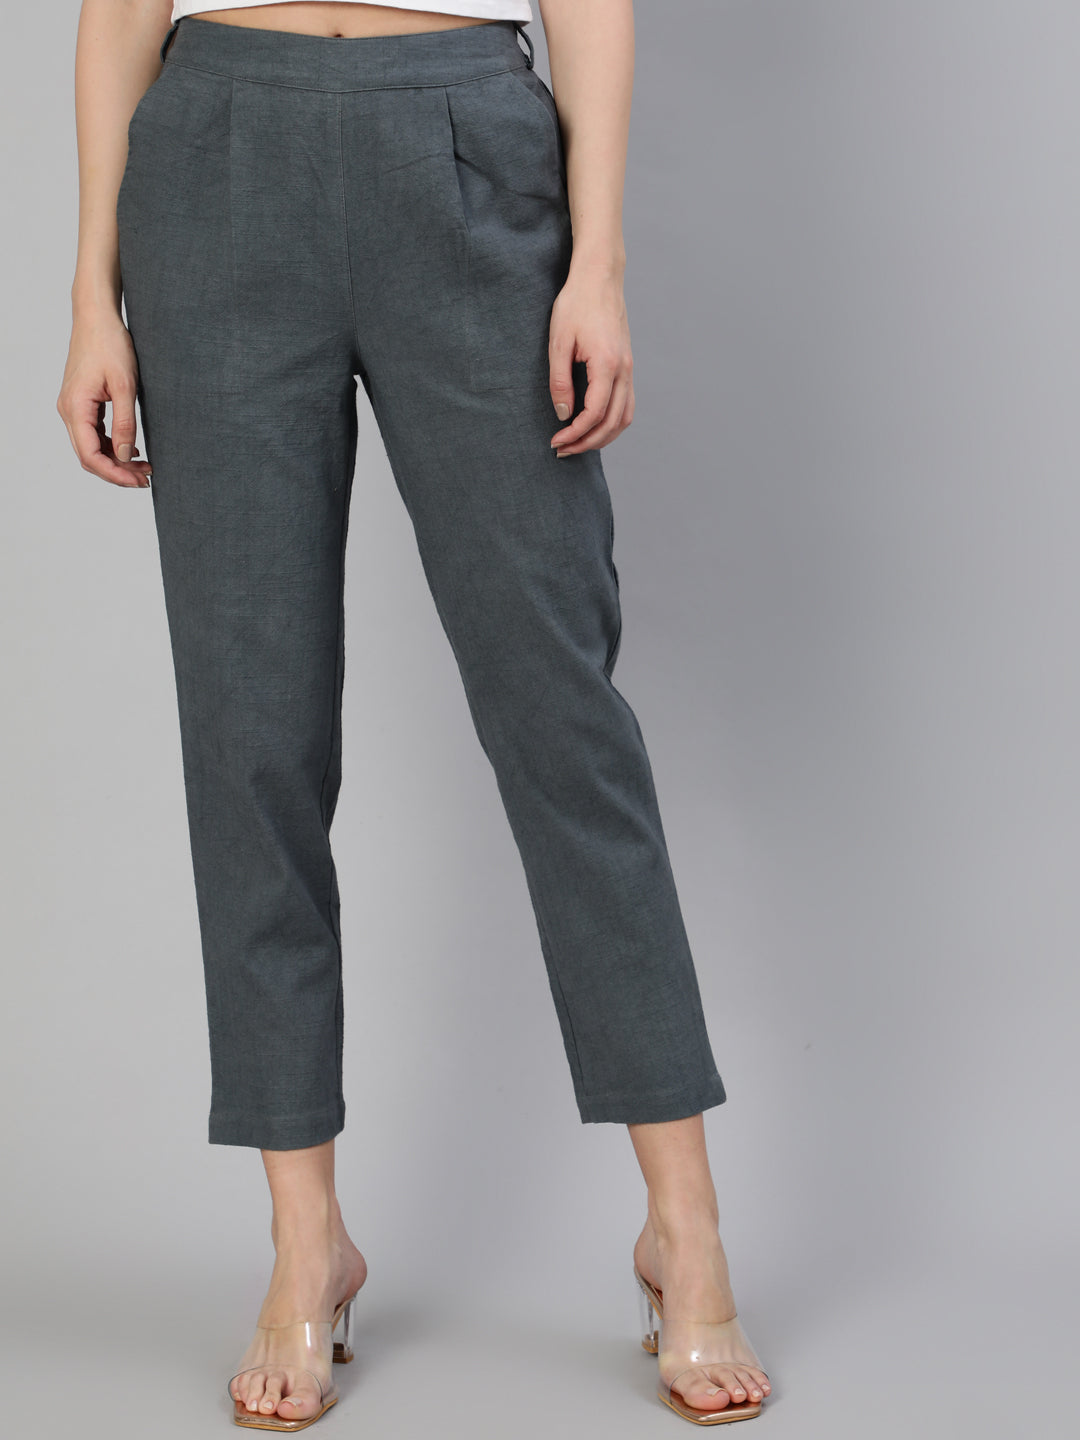 Shop Cotton Slub Charcoal Grey Pants